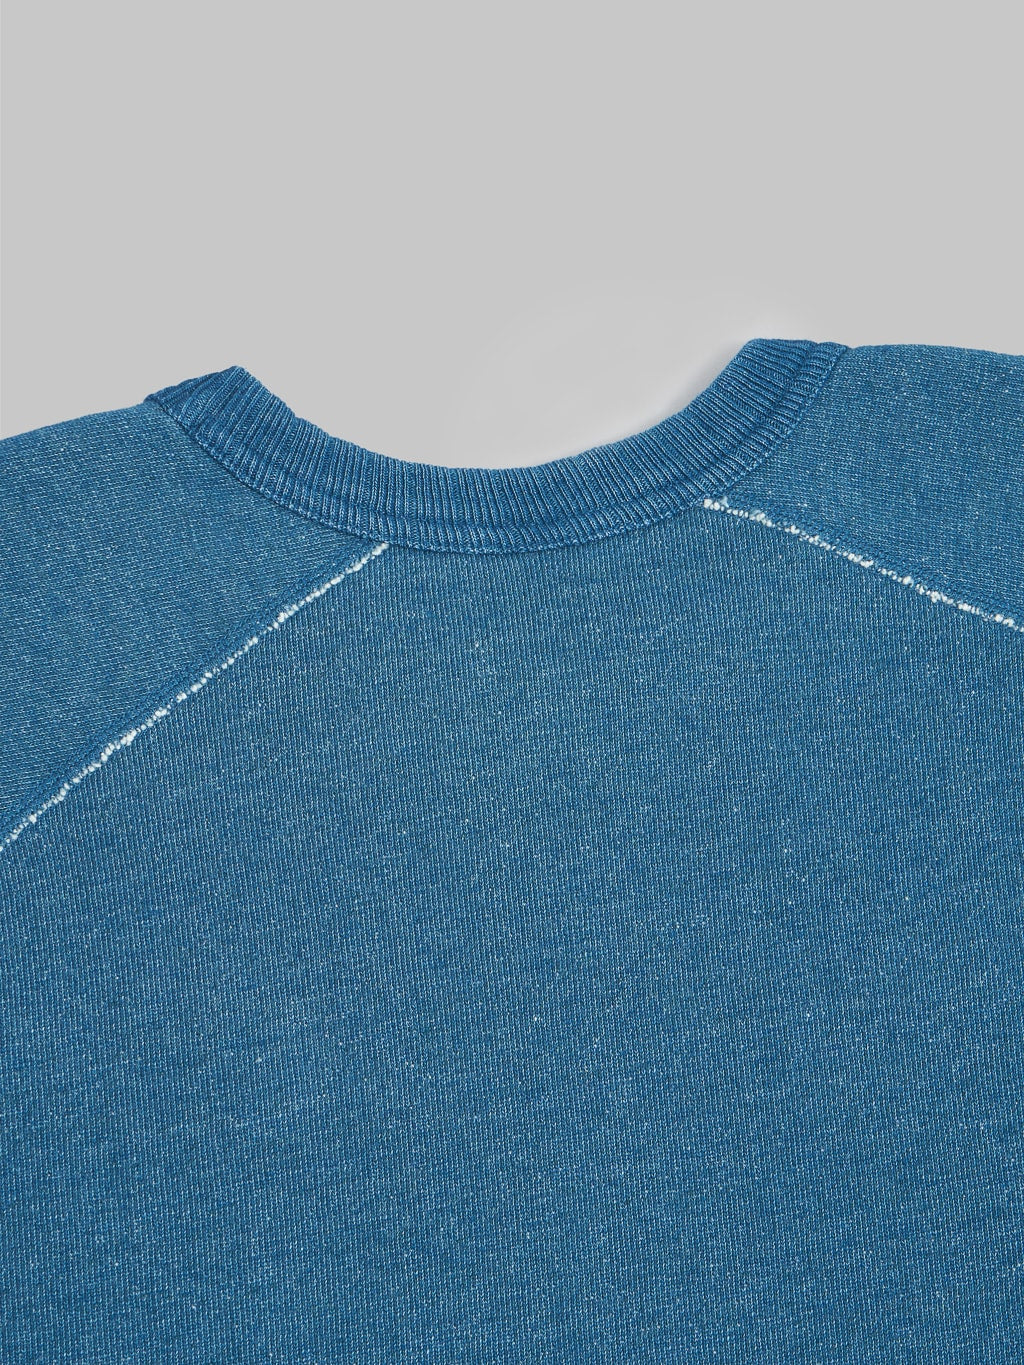 Pure Blue Japan Slub Yarn Sweatshirt Greencast Indigo seams